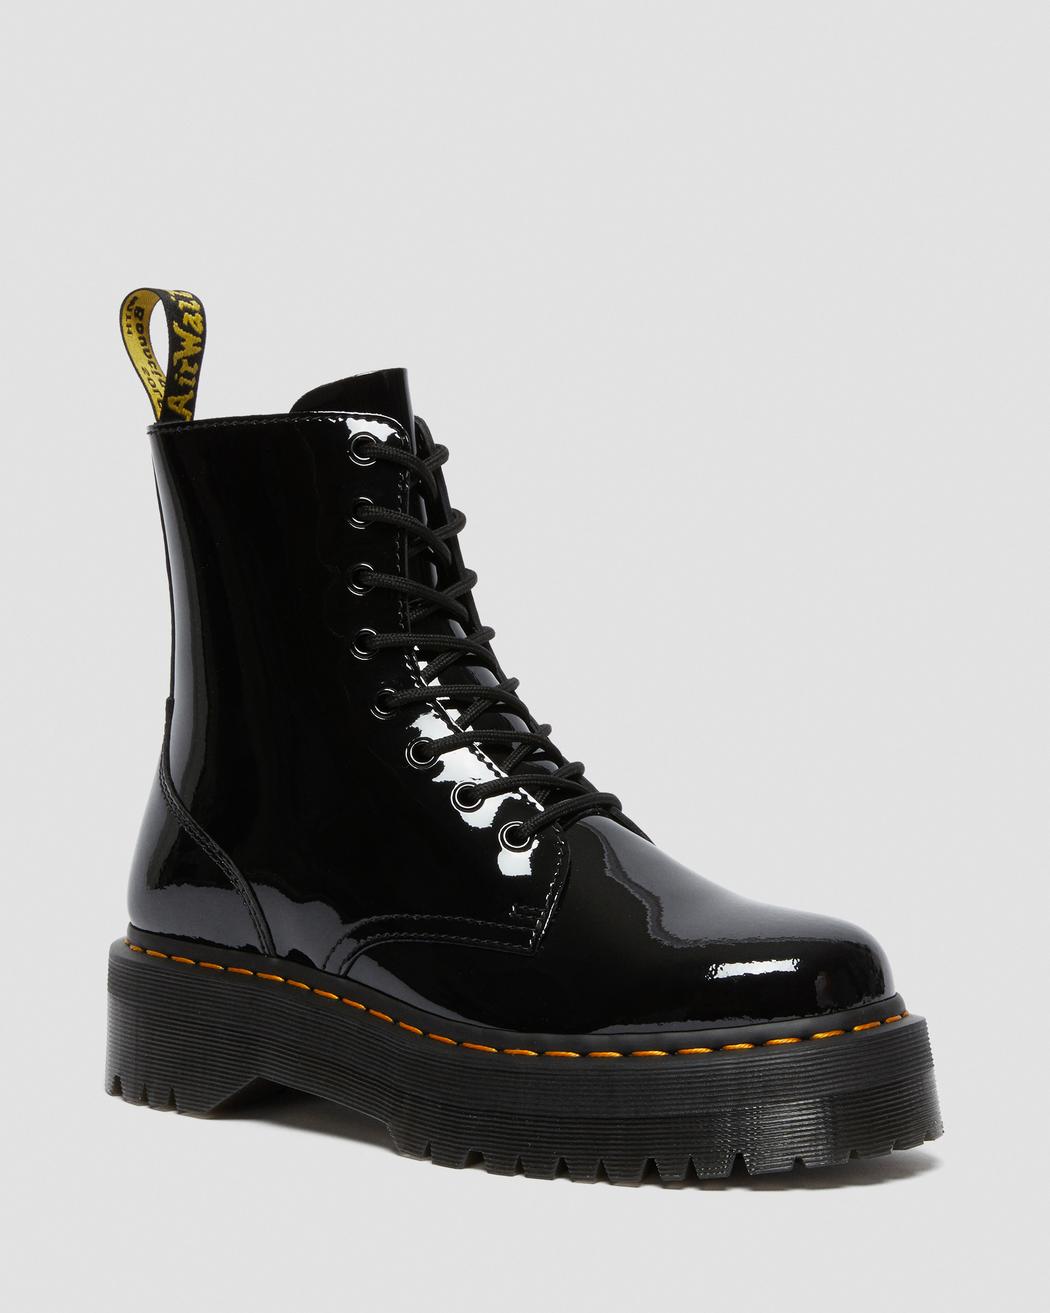 Jadon Black Patent Leather Platform Boots DM26646001 - 5